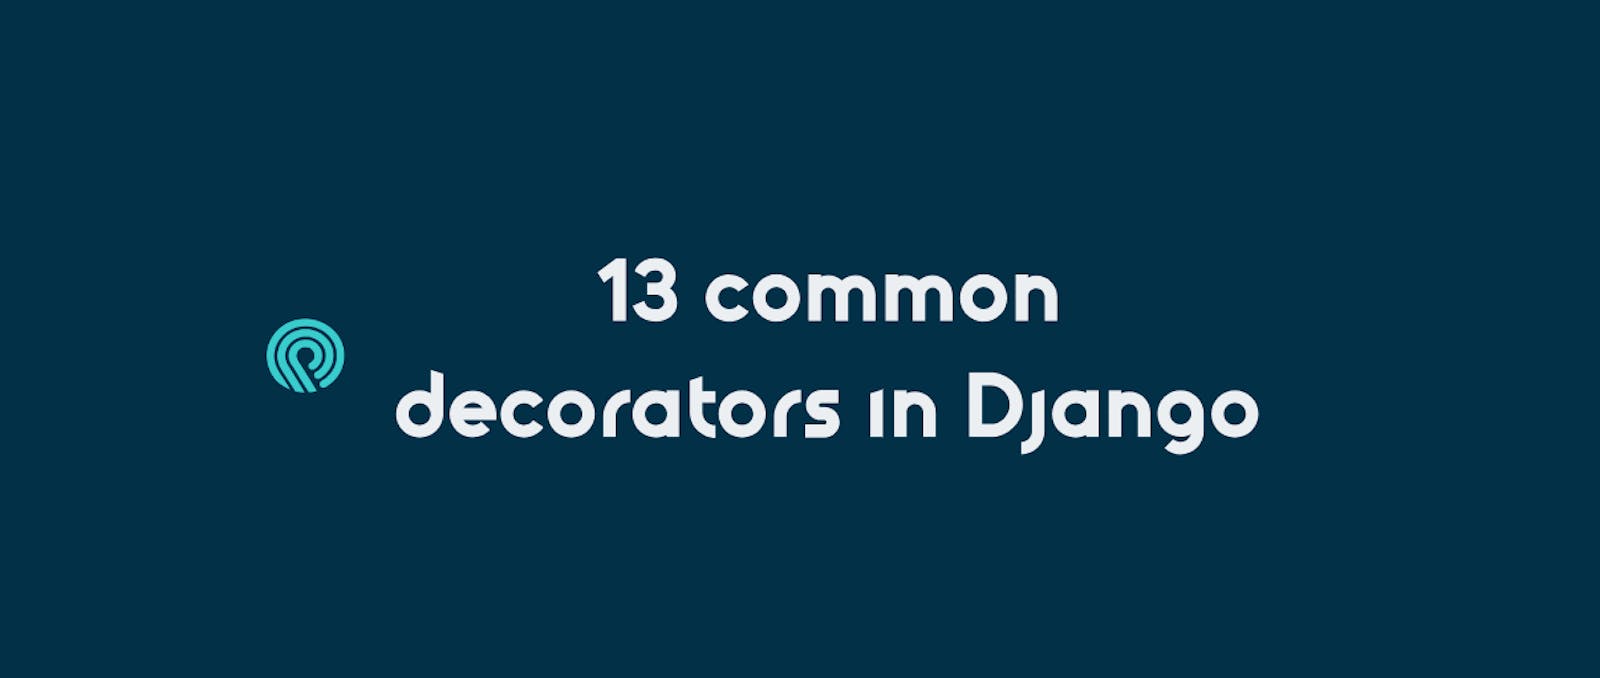 13 common decorators in Django